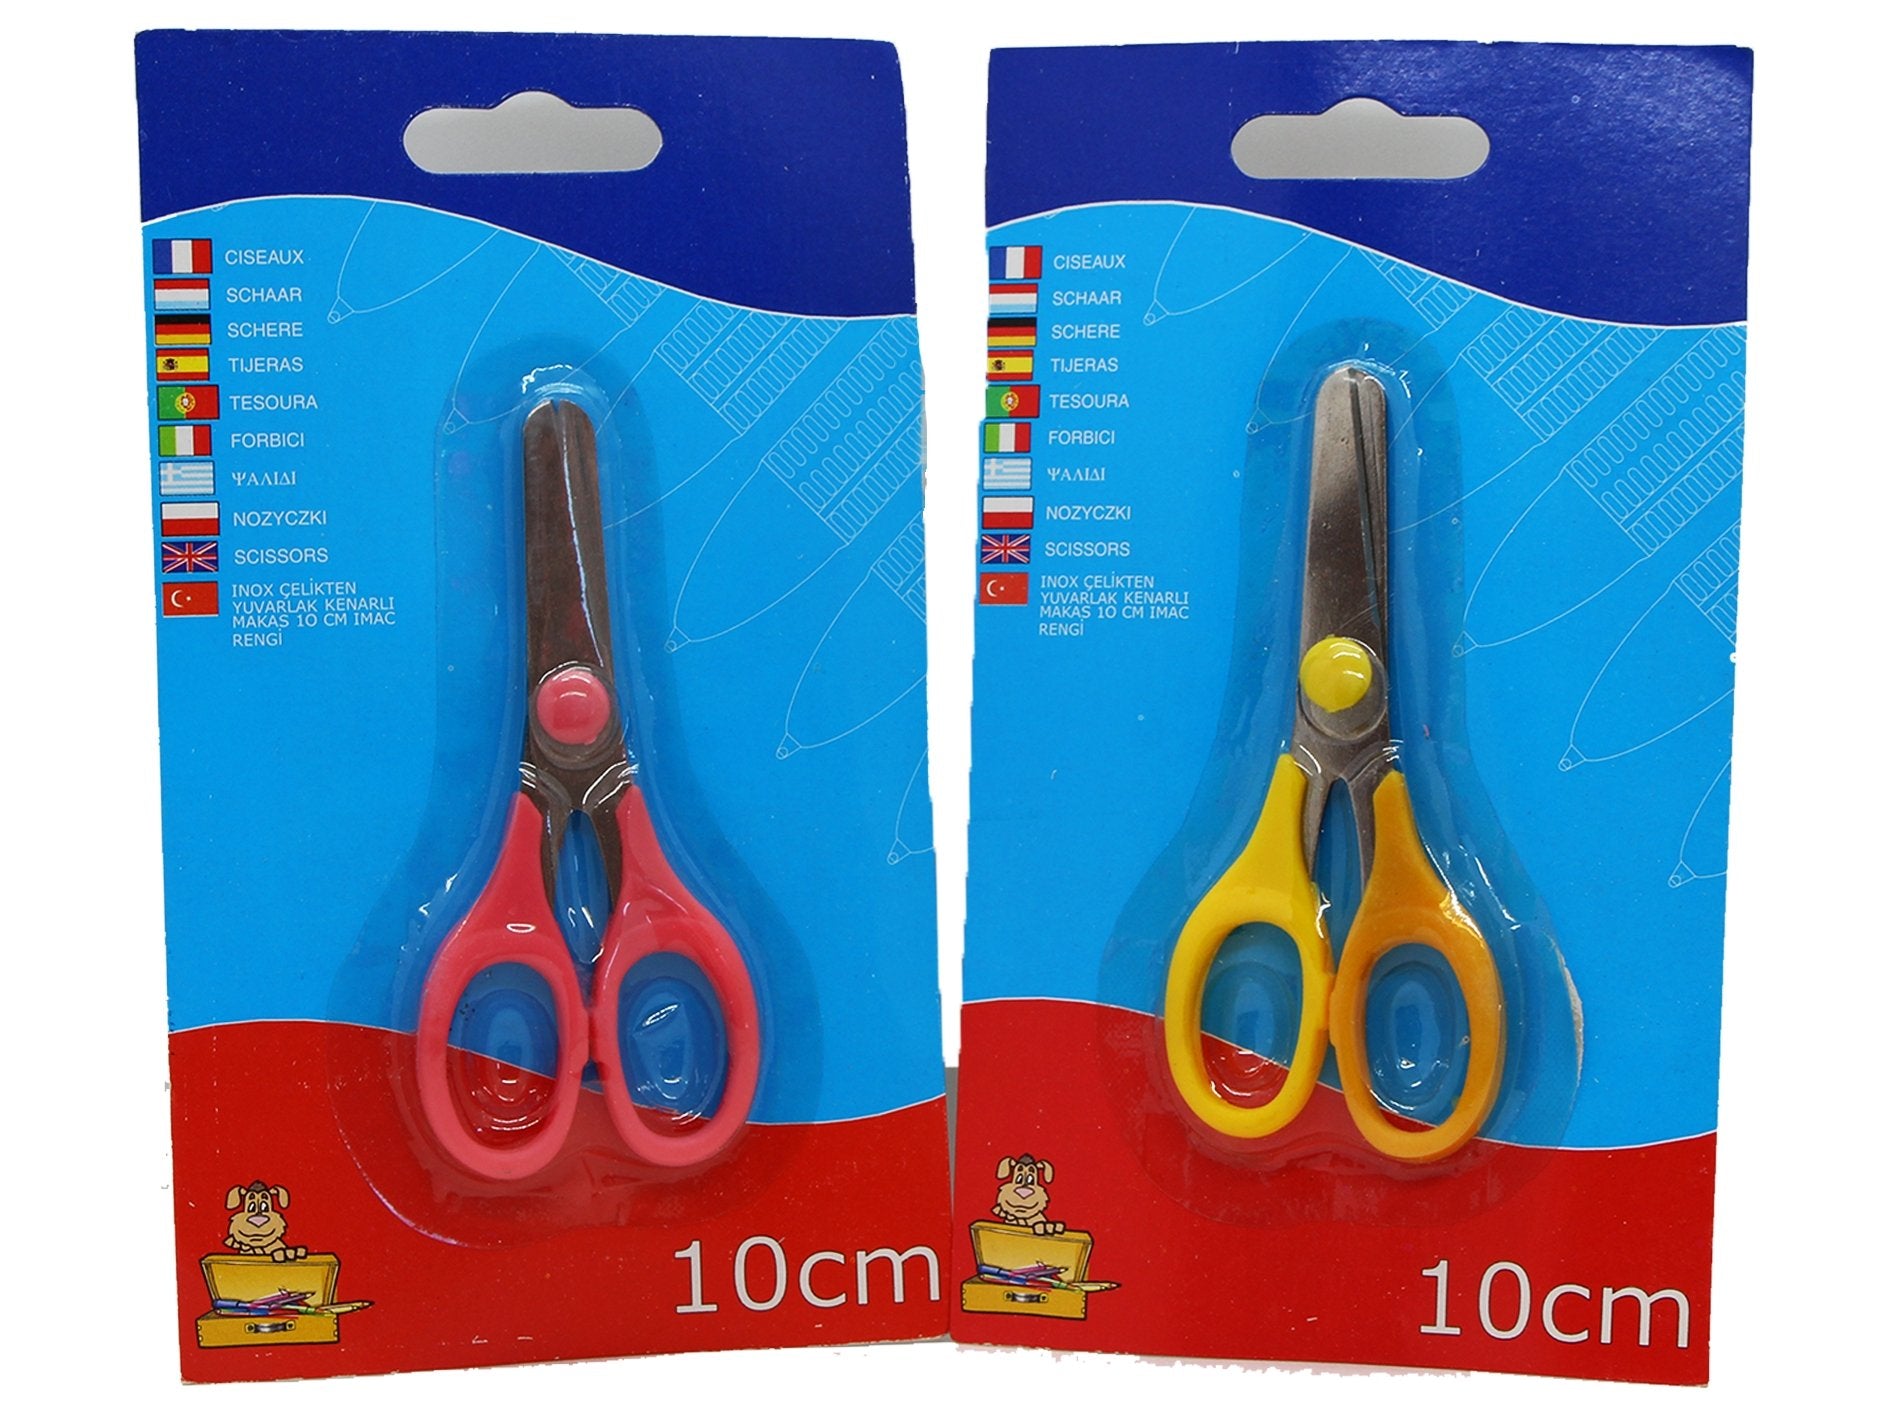 Scissors 50s 10cm - VIR Wholesale